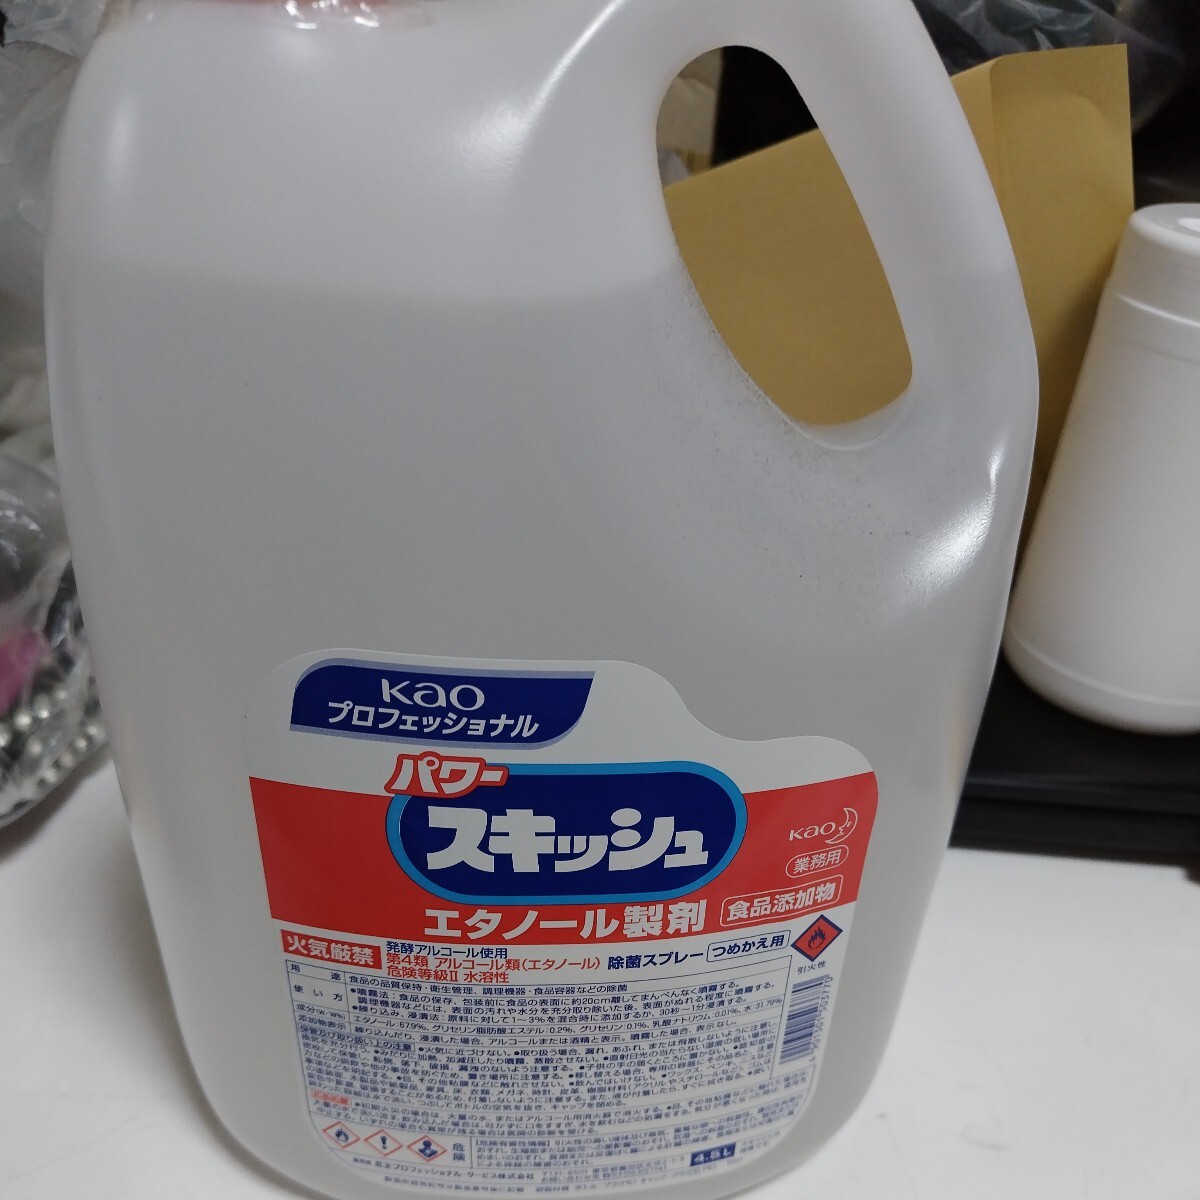  Kao Professional power skishu ethanol made .4.5 liter new goods unused 